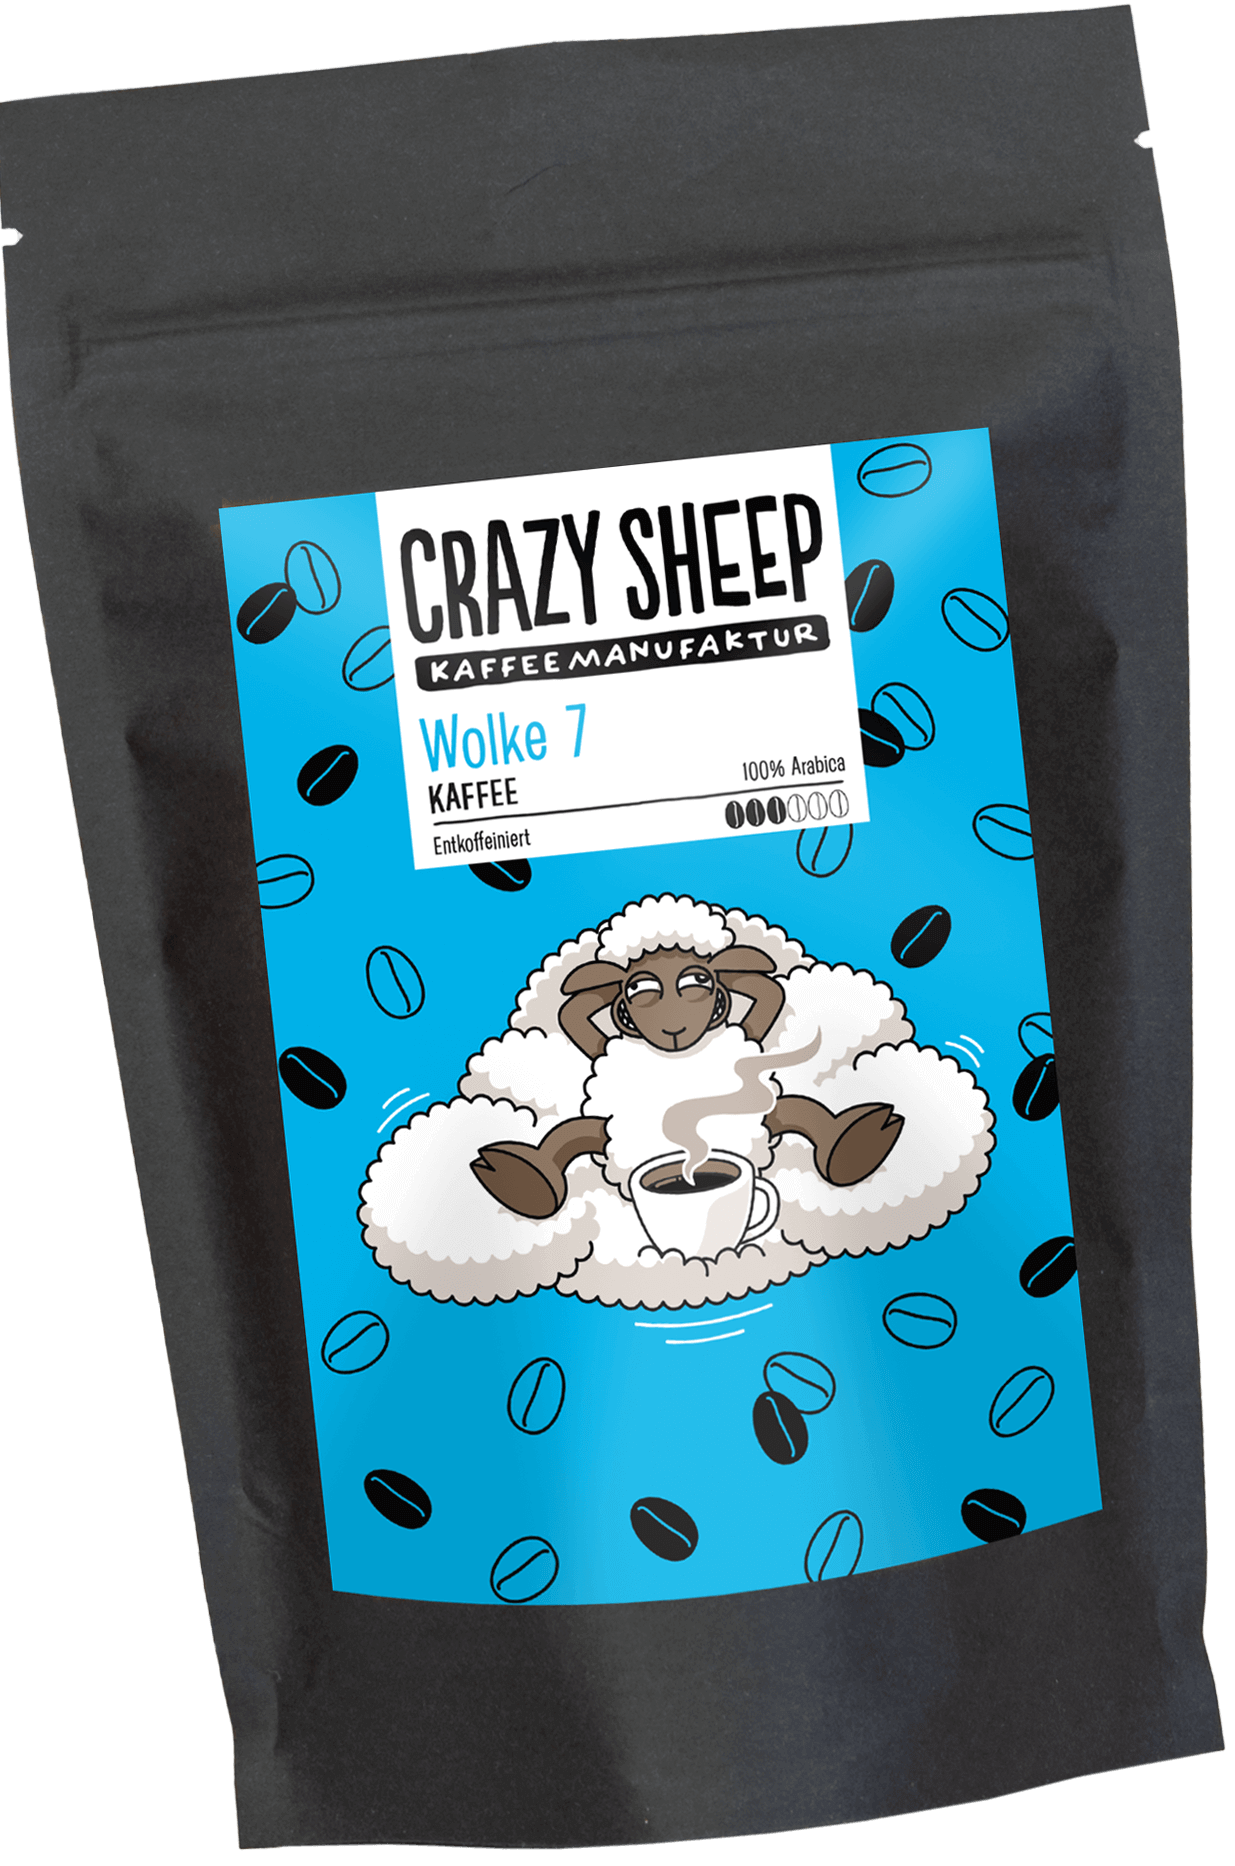 Wolke 7 Crazy Sheep Coffee